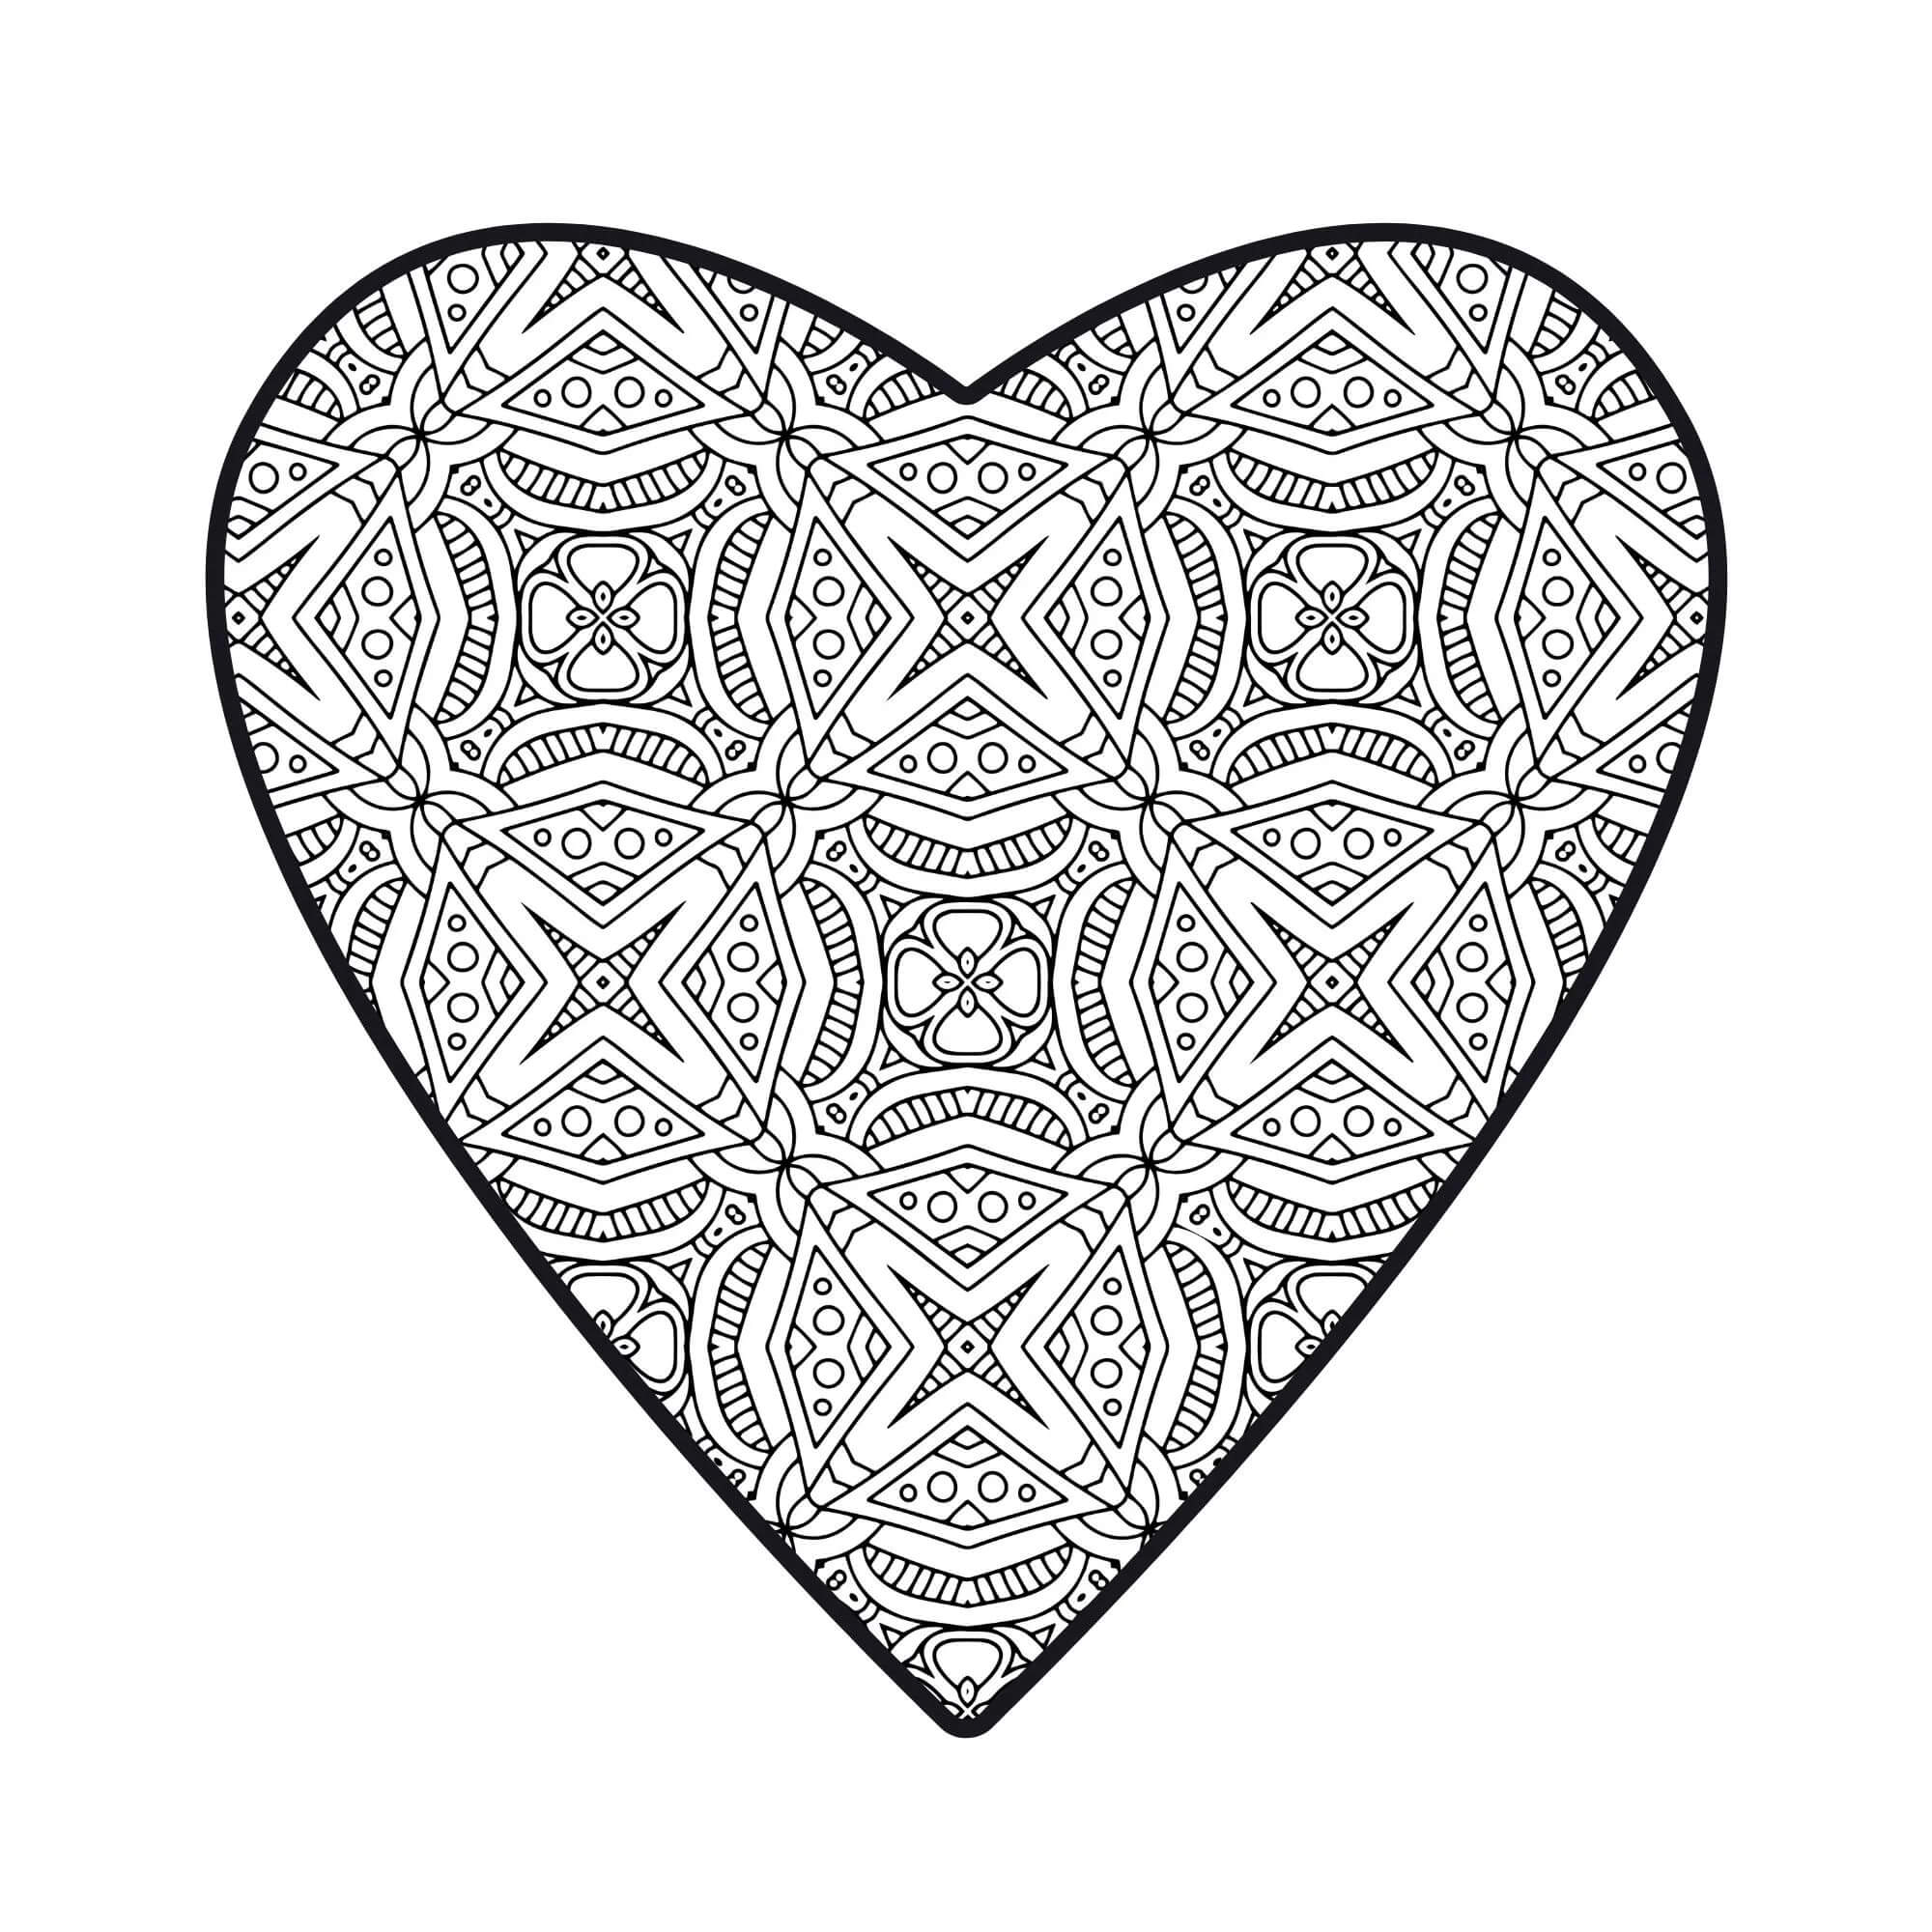 Mandala Heart Coloring Page - Sheet 11 Mandalas